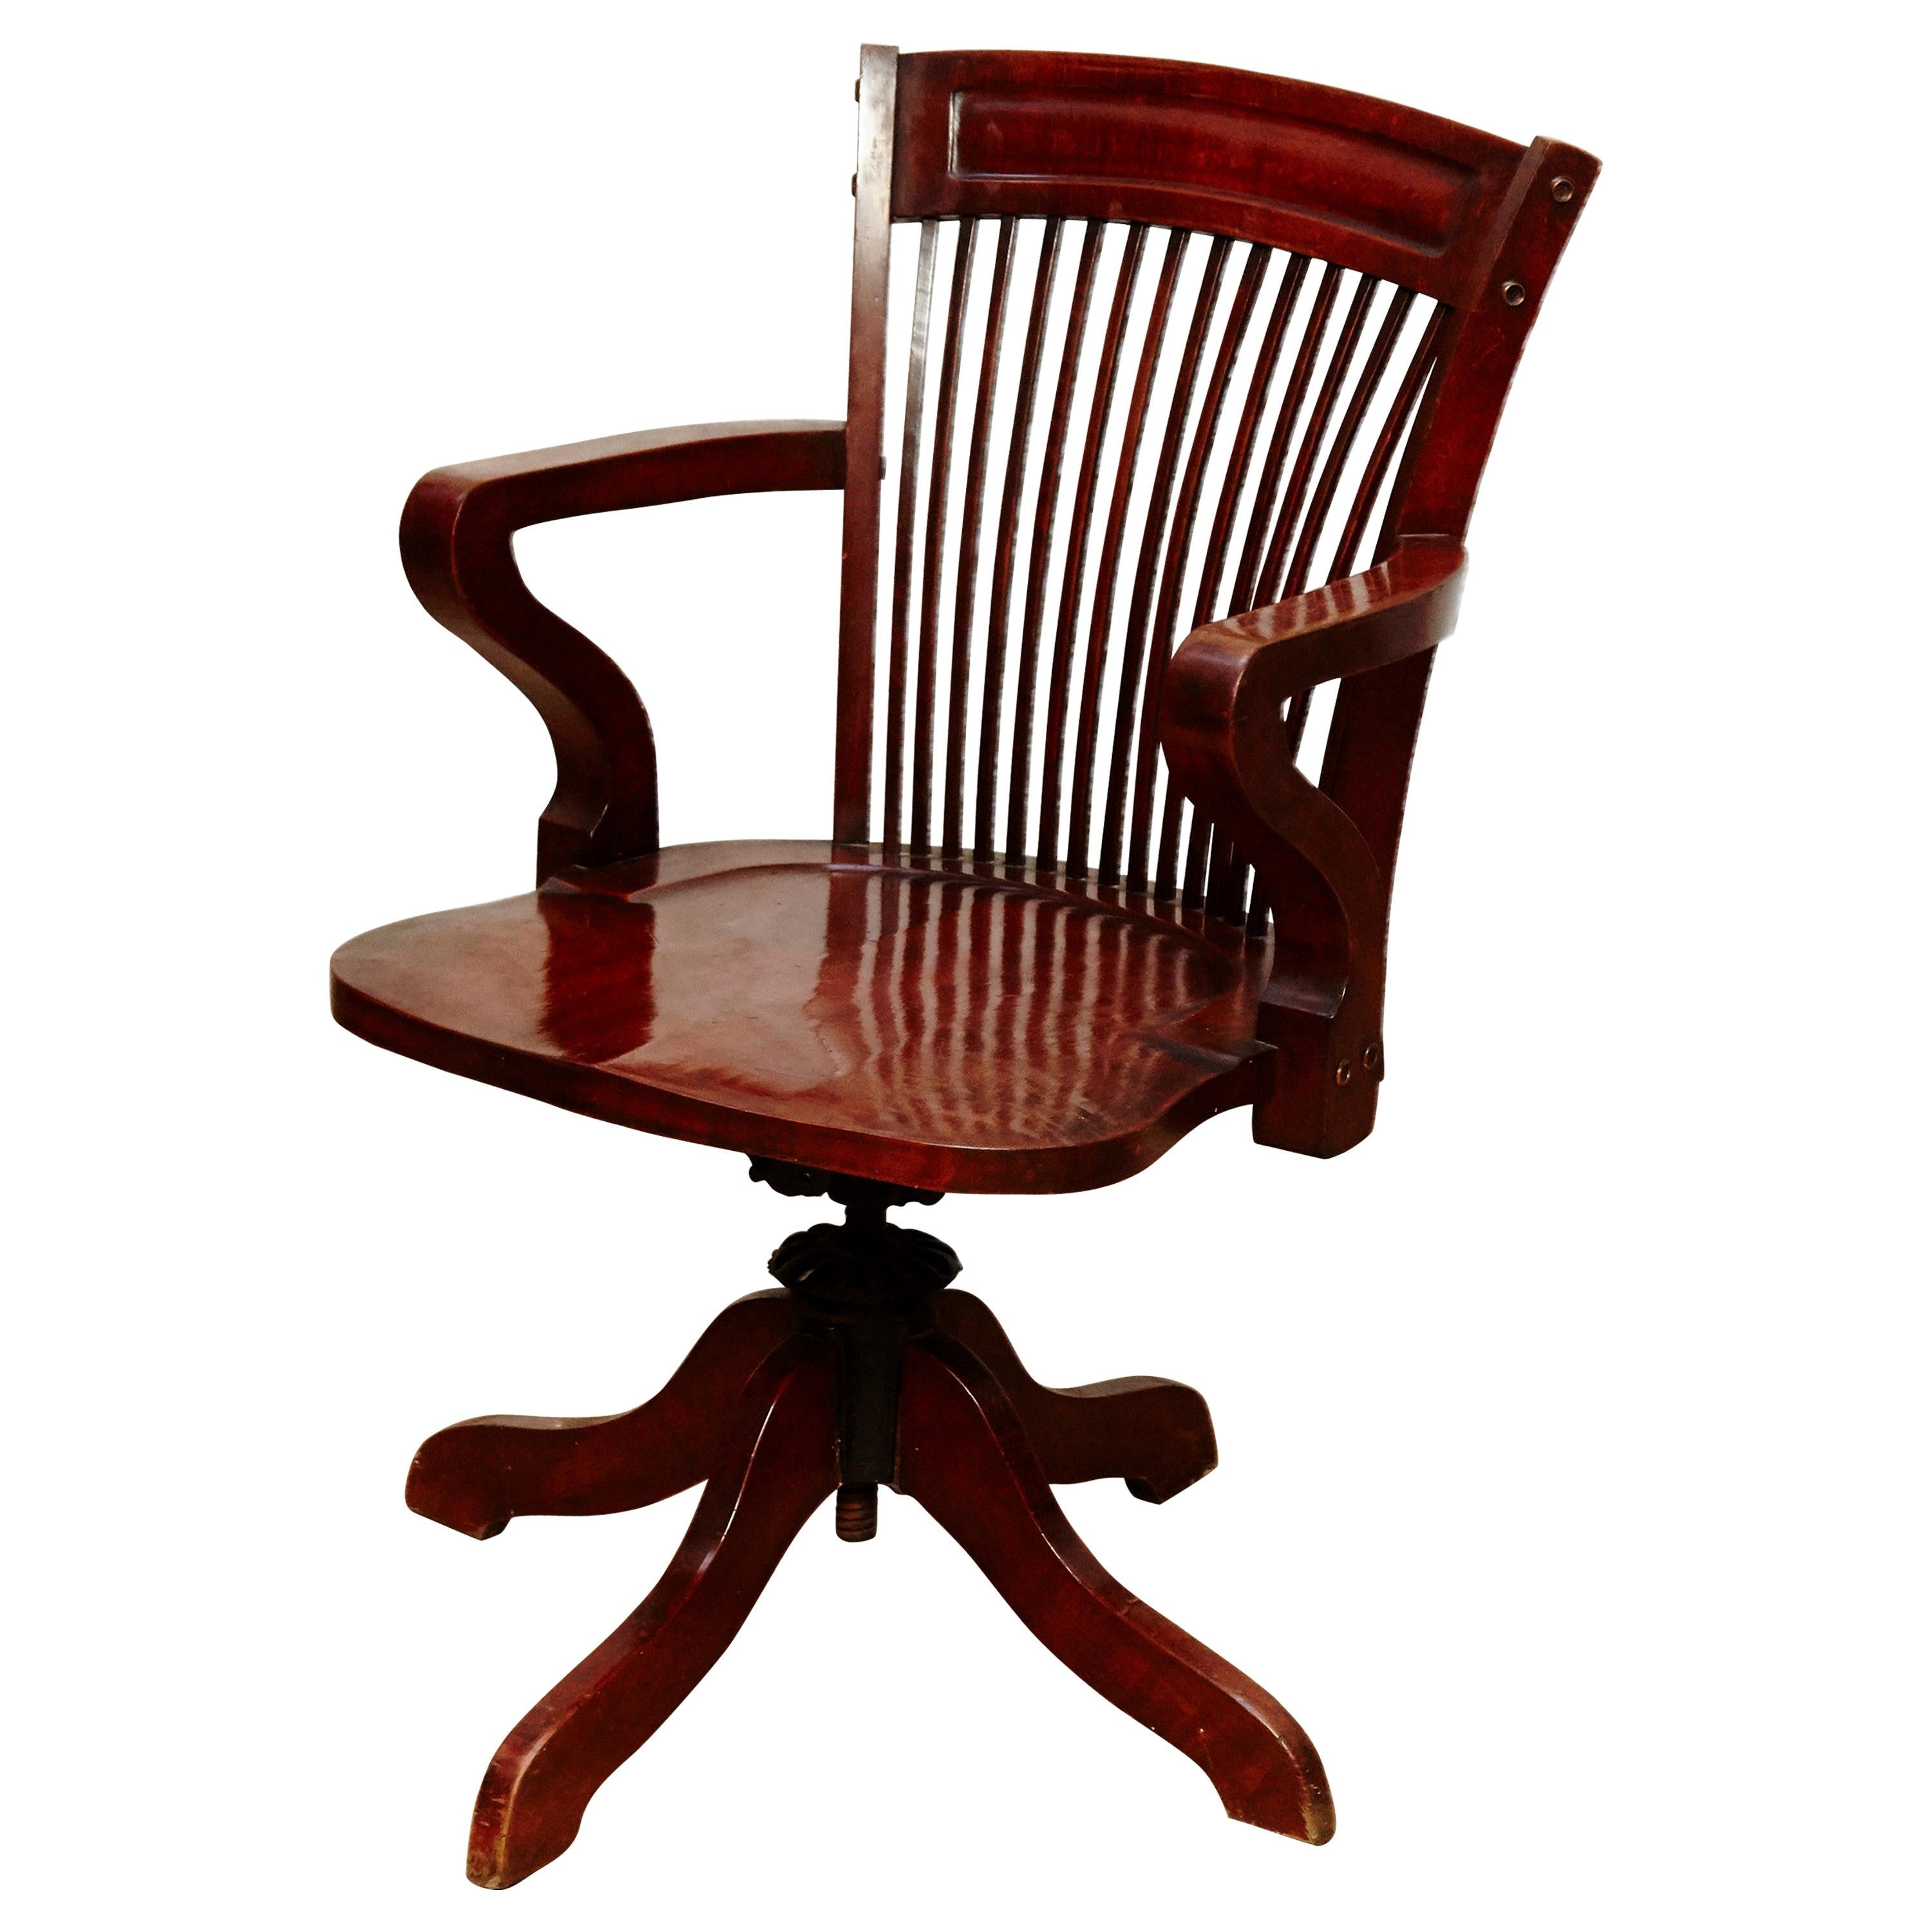 Modernist Wood Swivel Chair from Barcelona, circa 1940